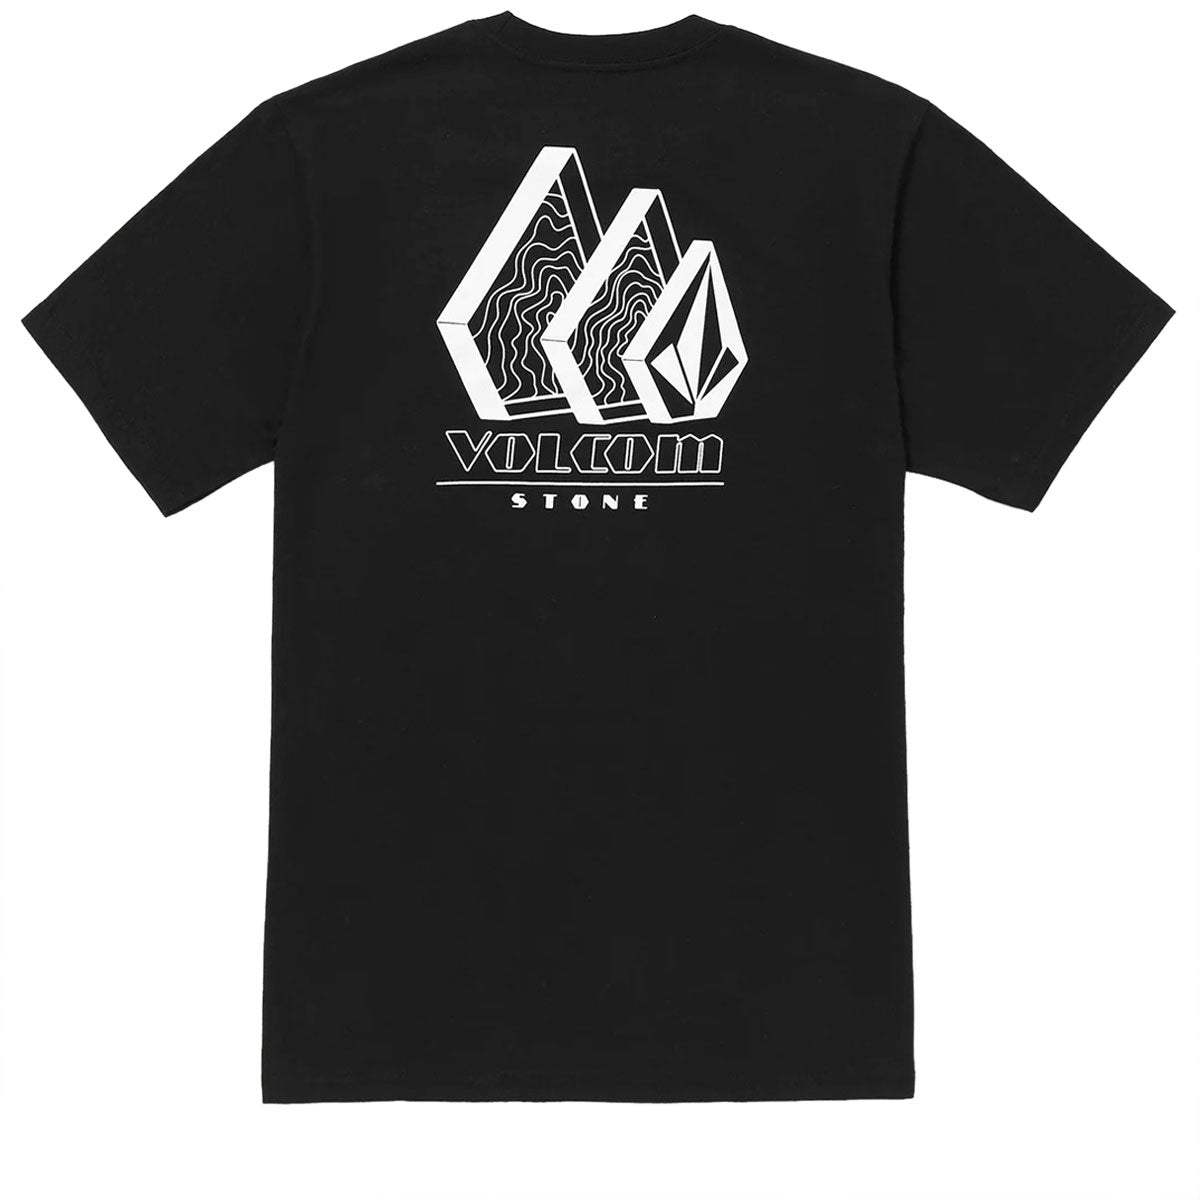 Volcom Repeater T-Shirt - Black image 2